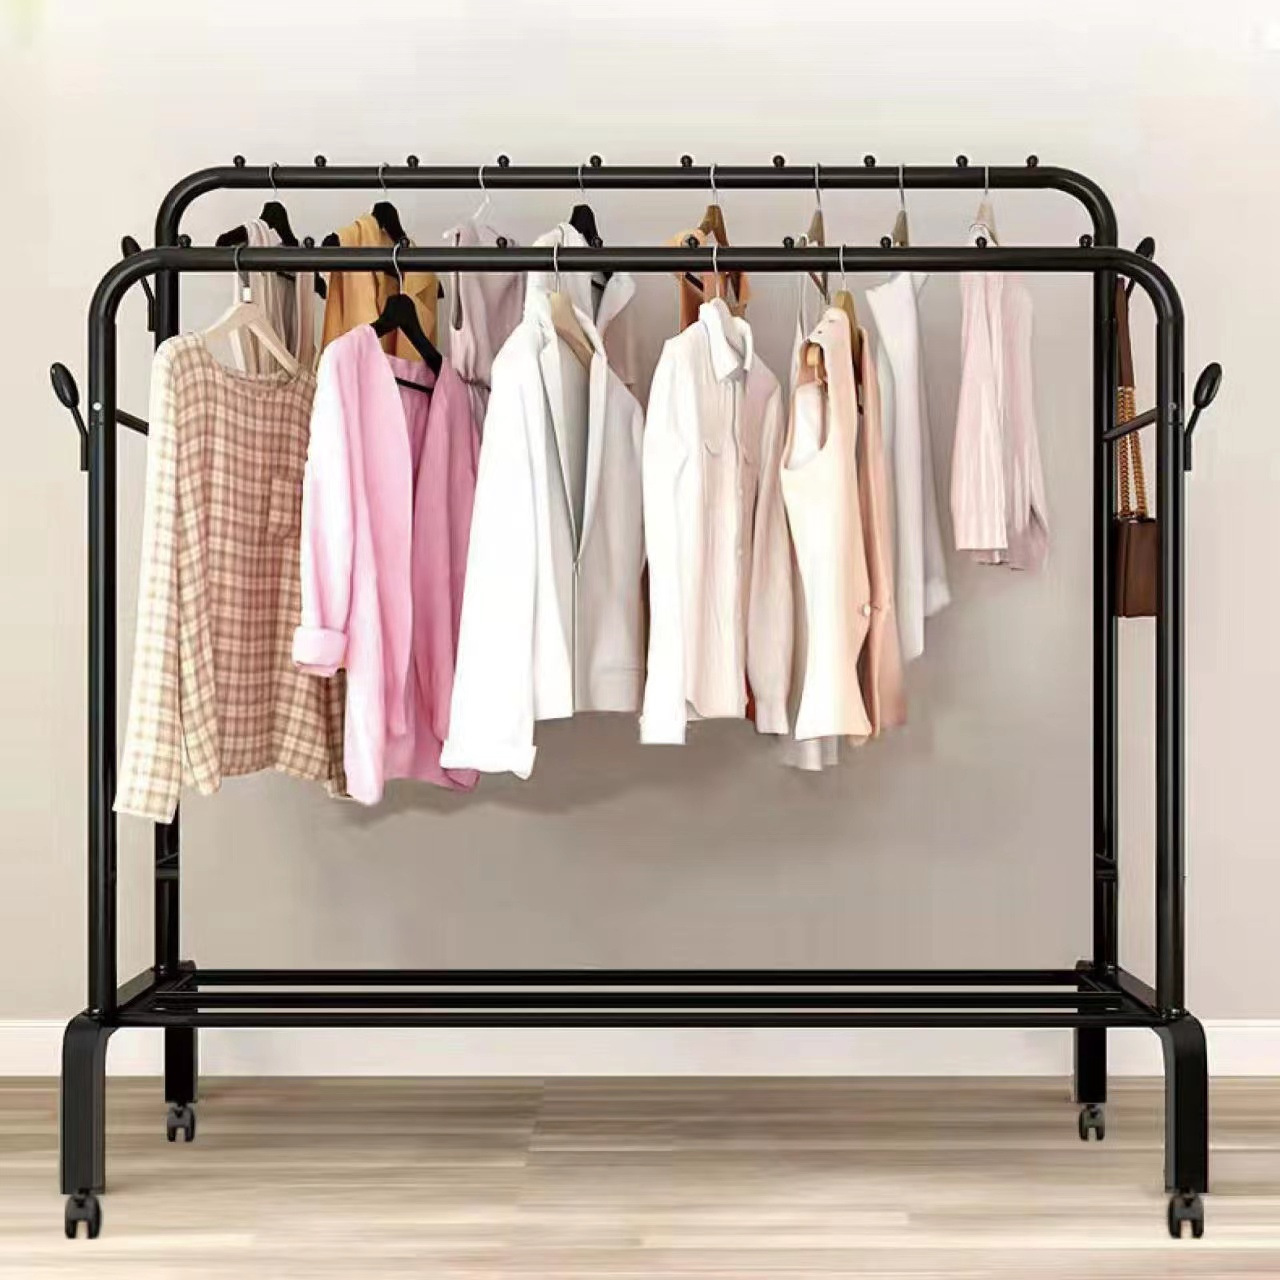 Clothes Hanger Floor Student Household Dormitory Folding Bedroom Drying Rack Balcony Storage Simple Coat Rack Wholesale